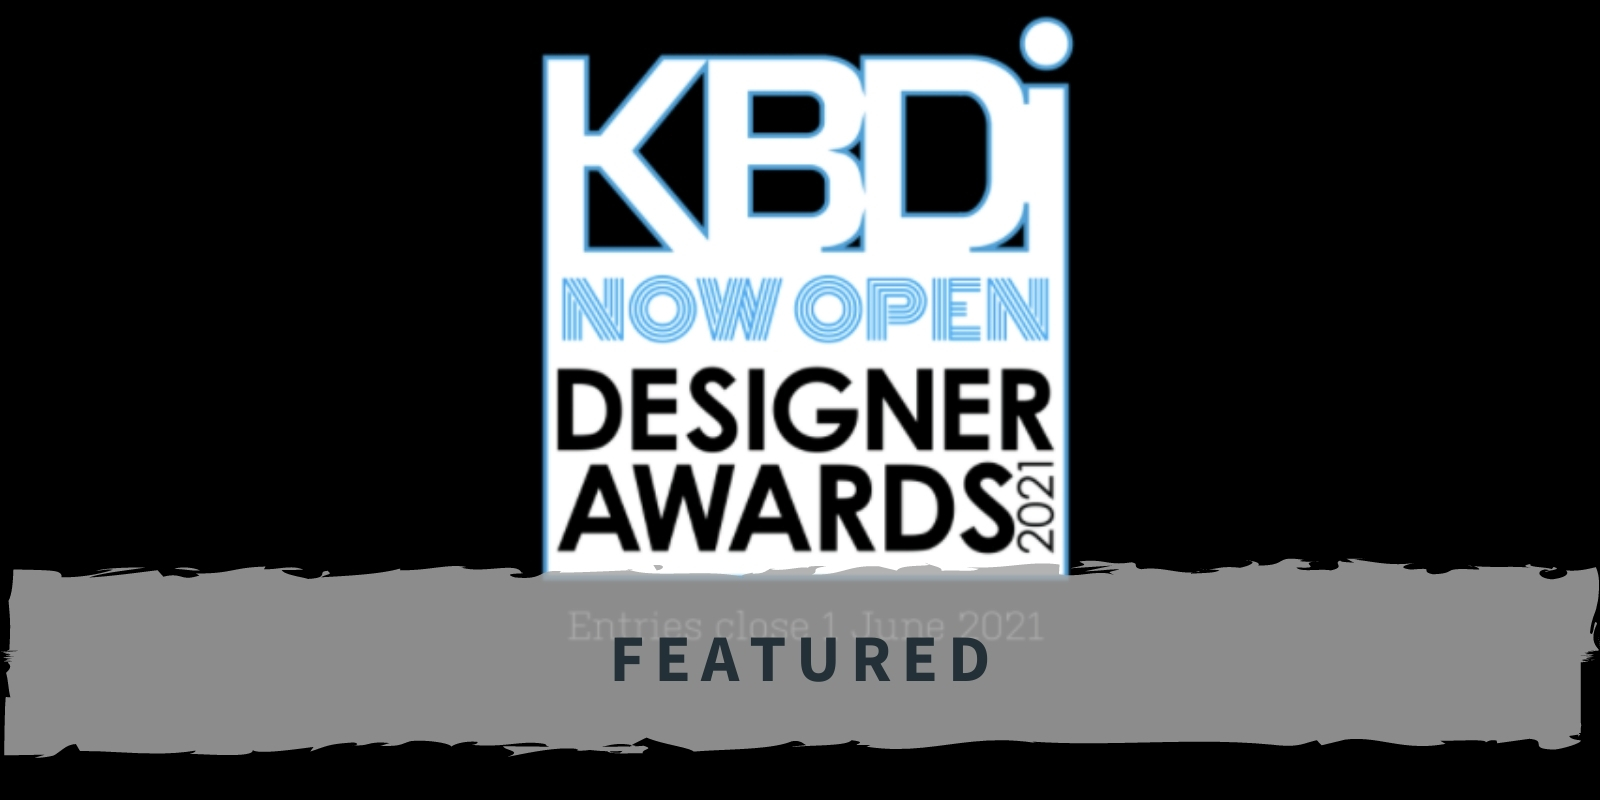 KBDi Designer Awards 2021